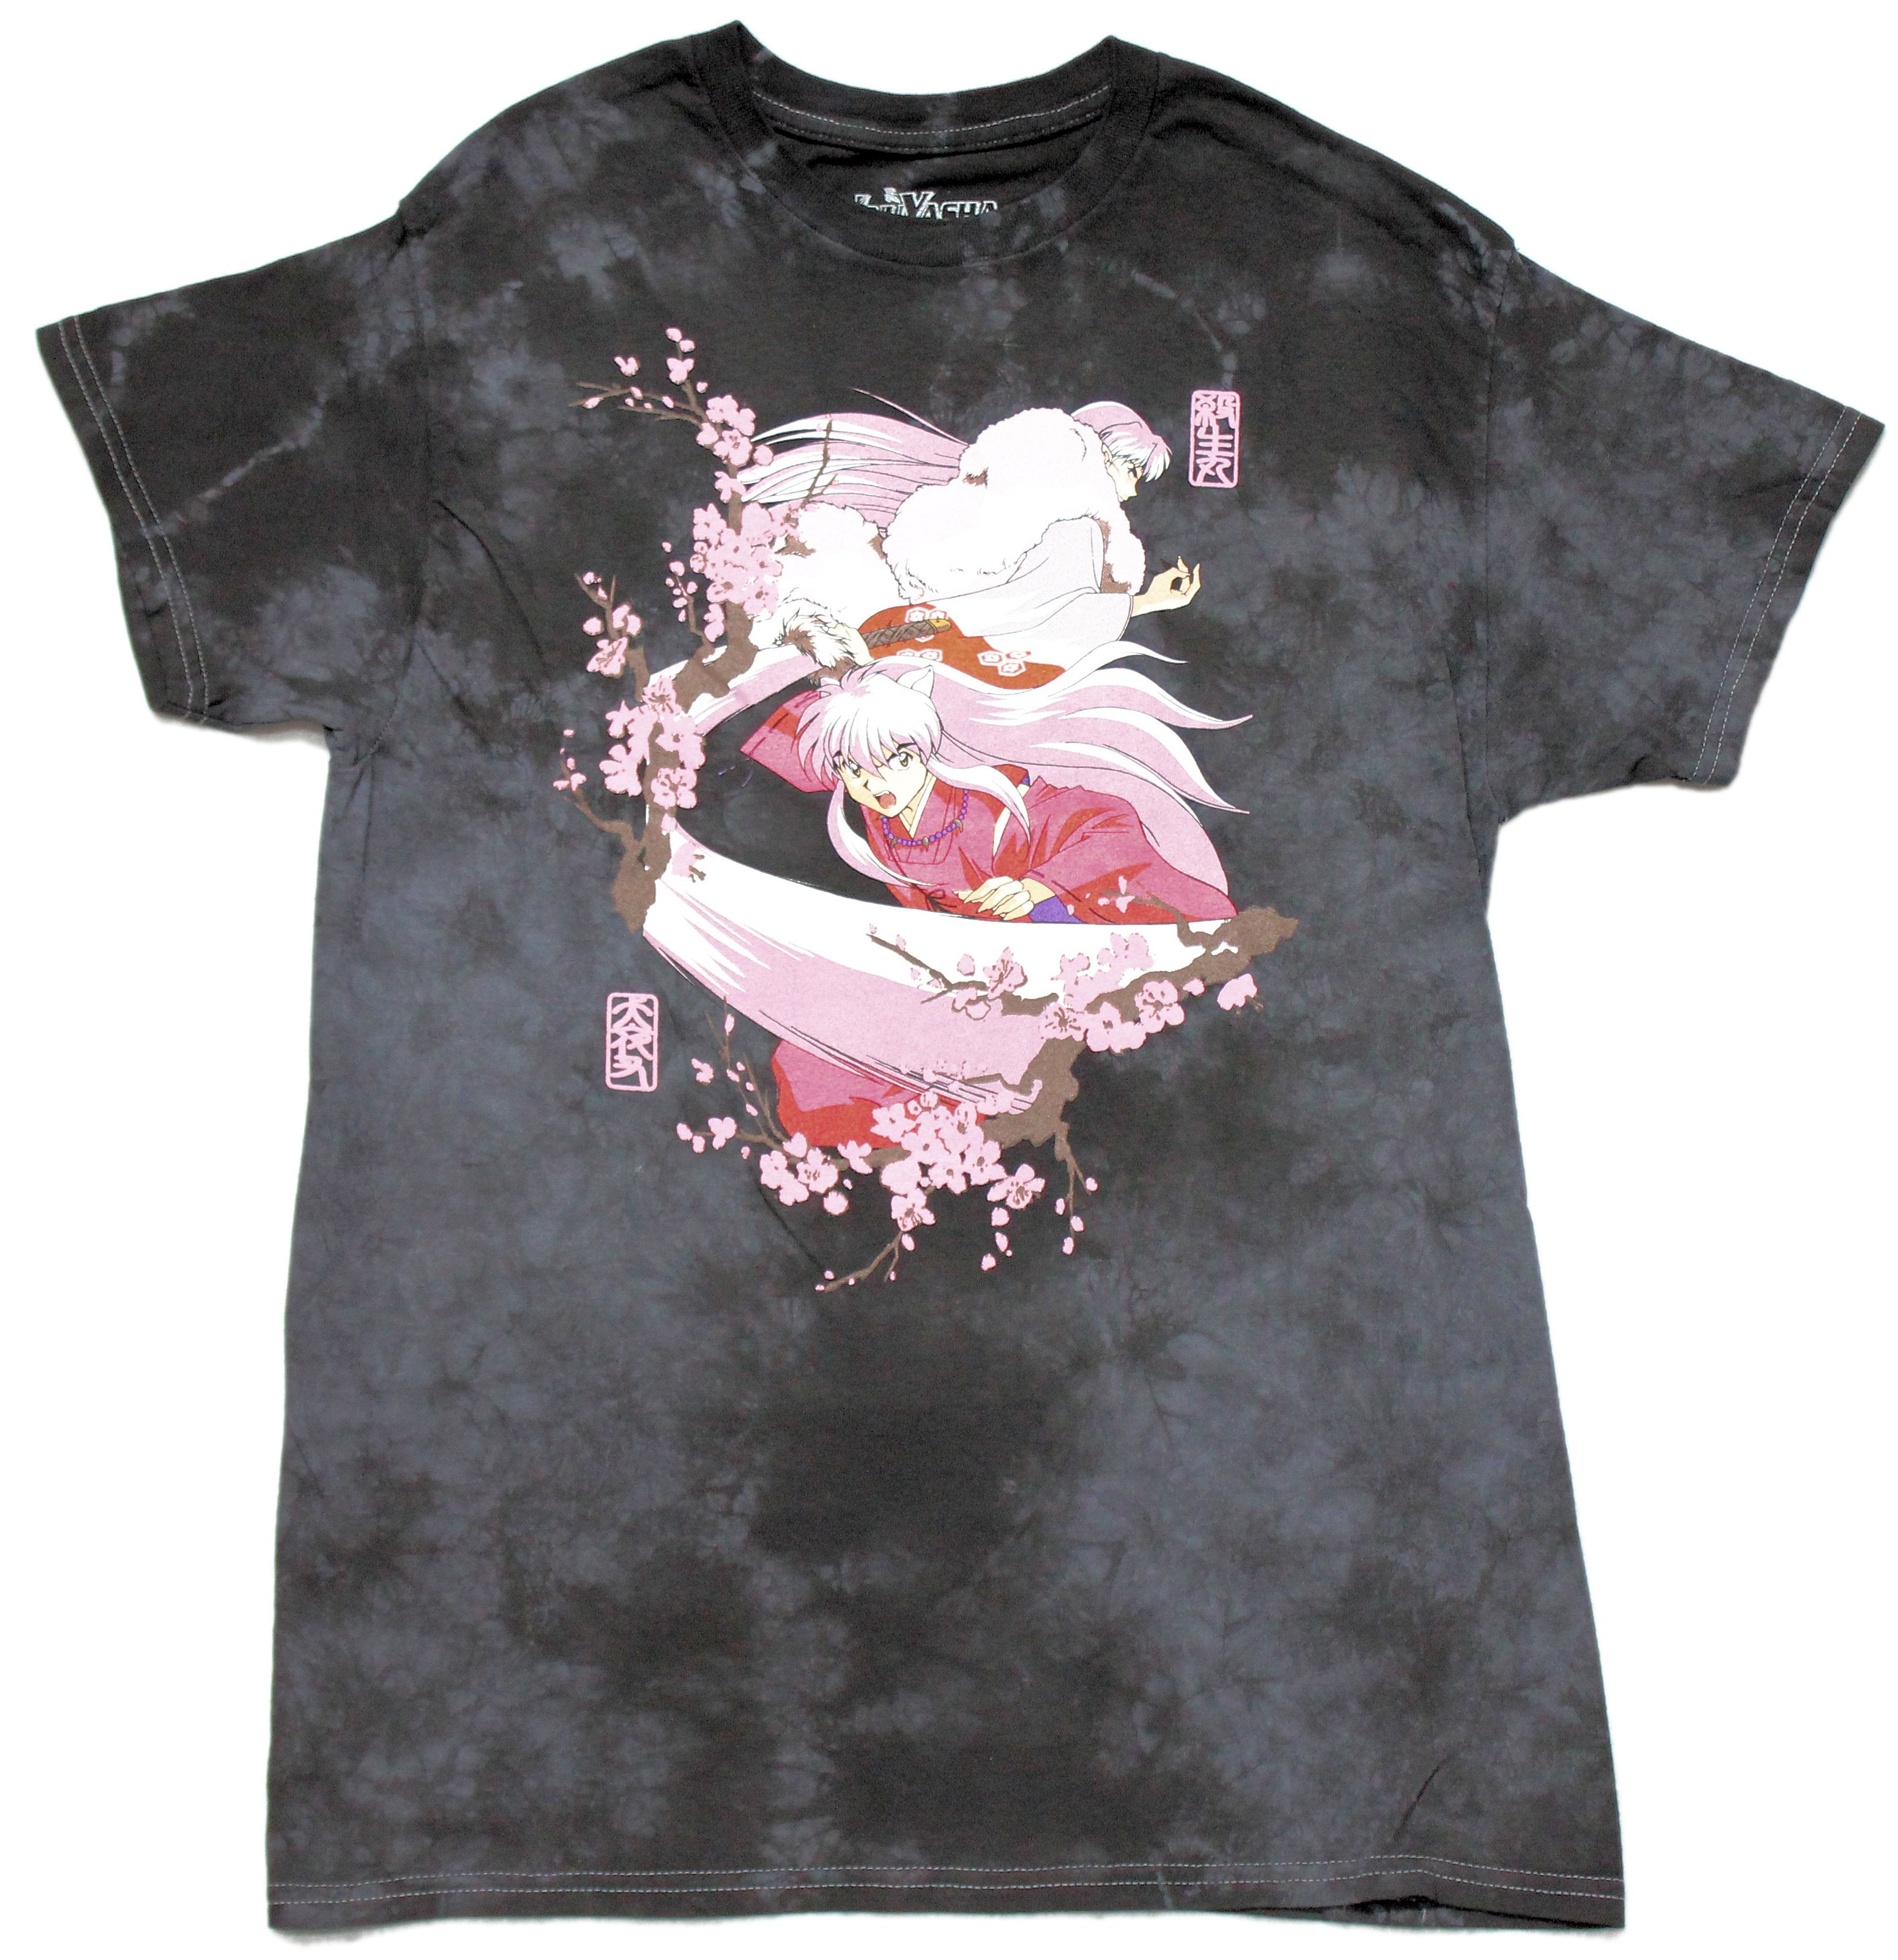 Inuyasha Mens Tie Dye T-Shirt - Inuyasha and Sessh?maru In Sakura Tree